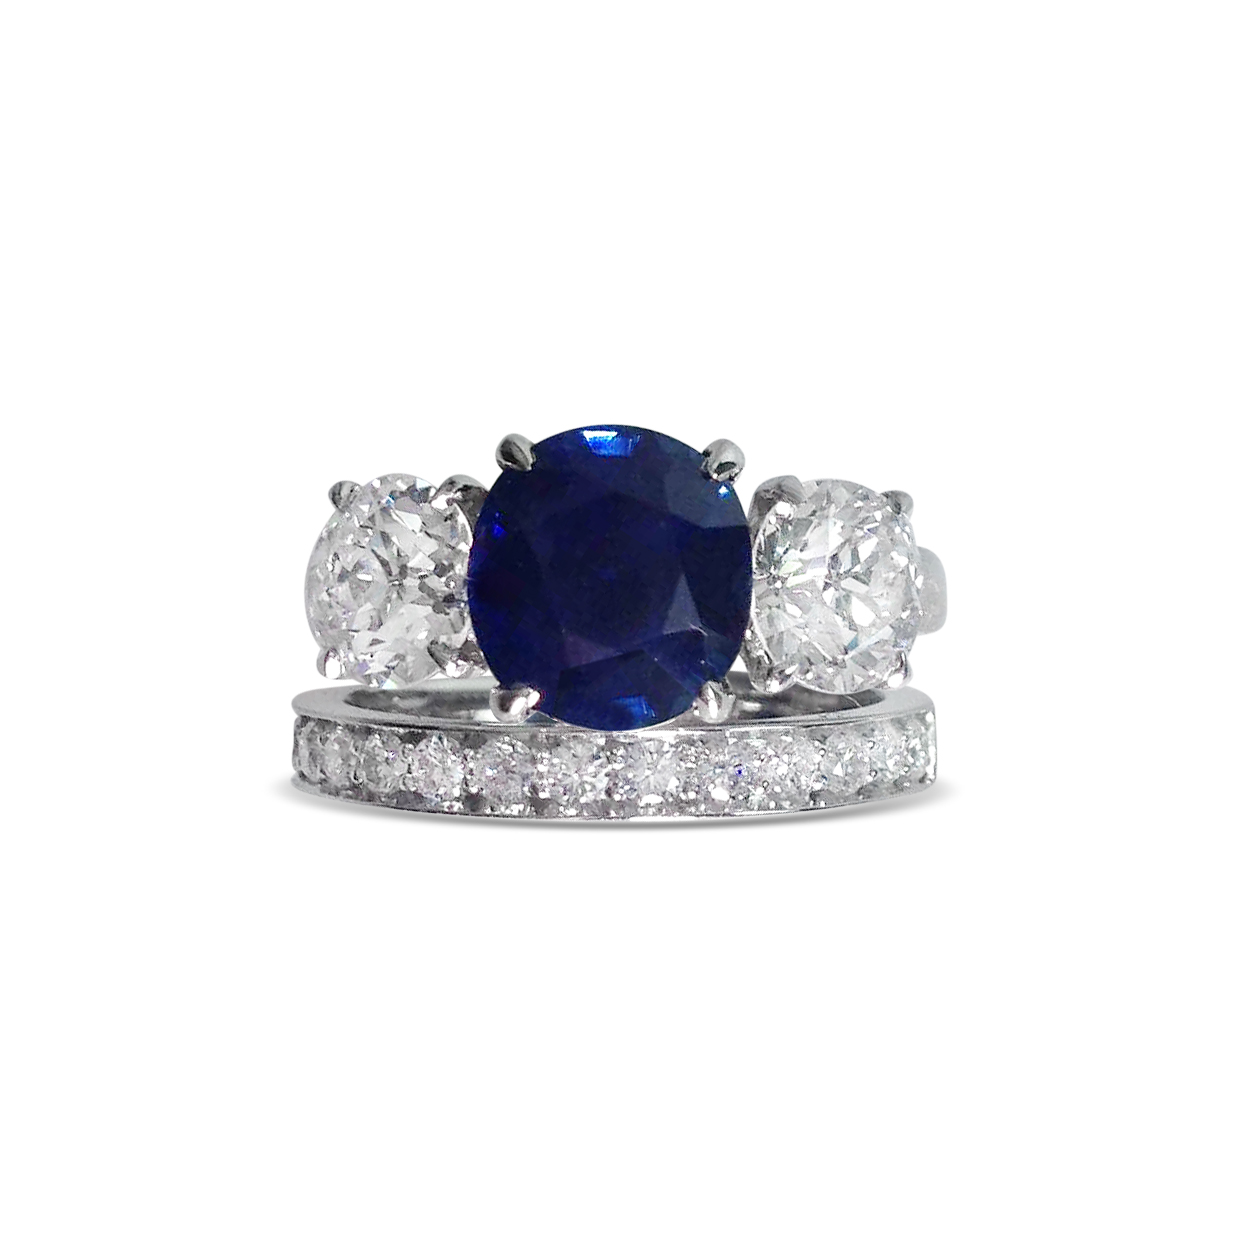 sapphire-and-diamond-three-stone-ring-mounted-in-platinum-with-hald-set-platinum-wedding-band.jpg